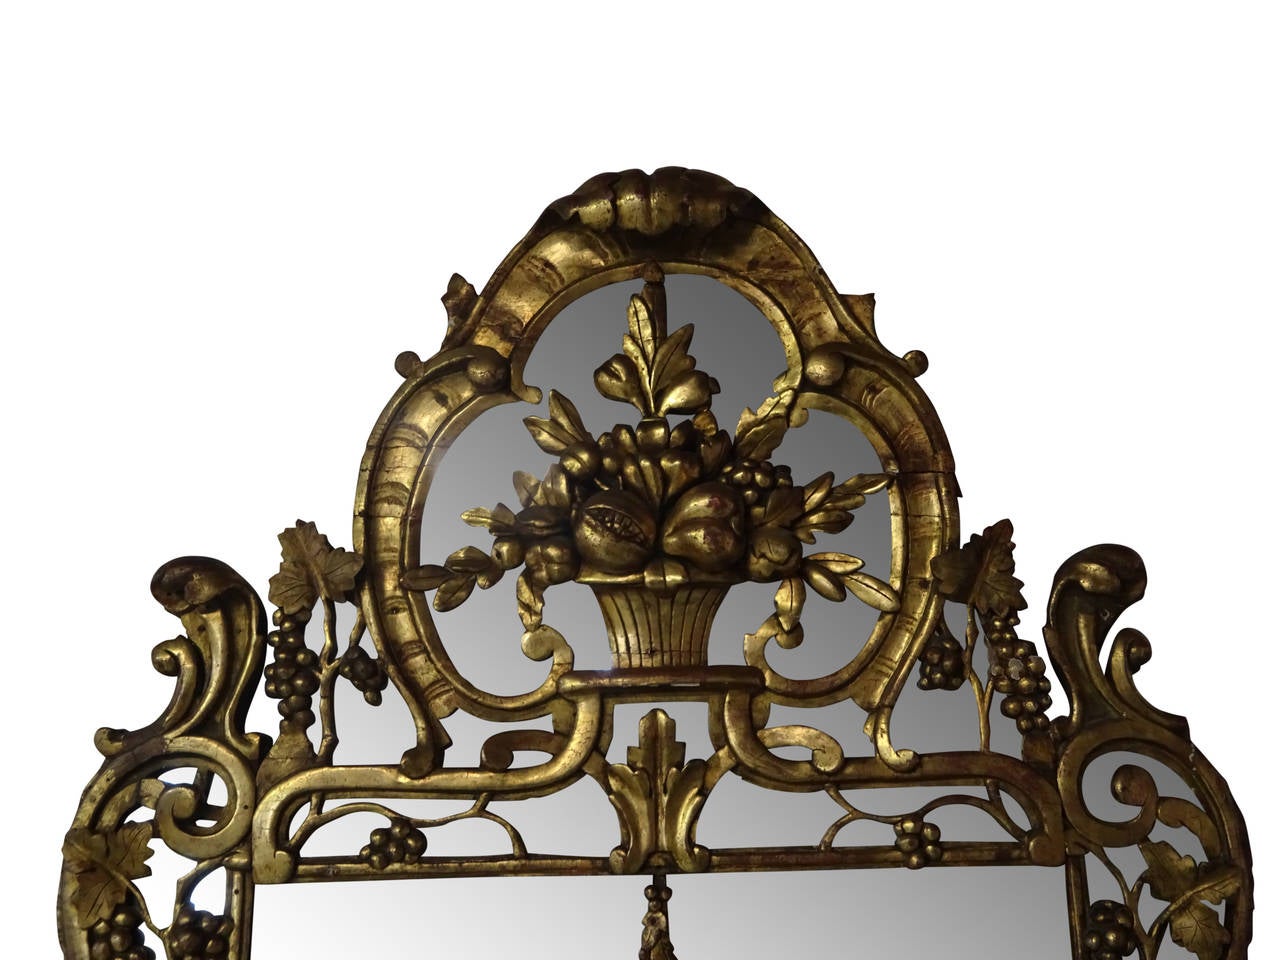 A stunning period 18th century Louis XVI gilt mirror.